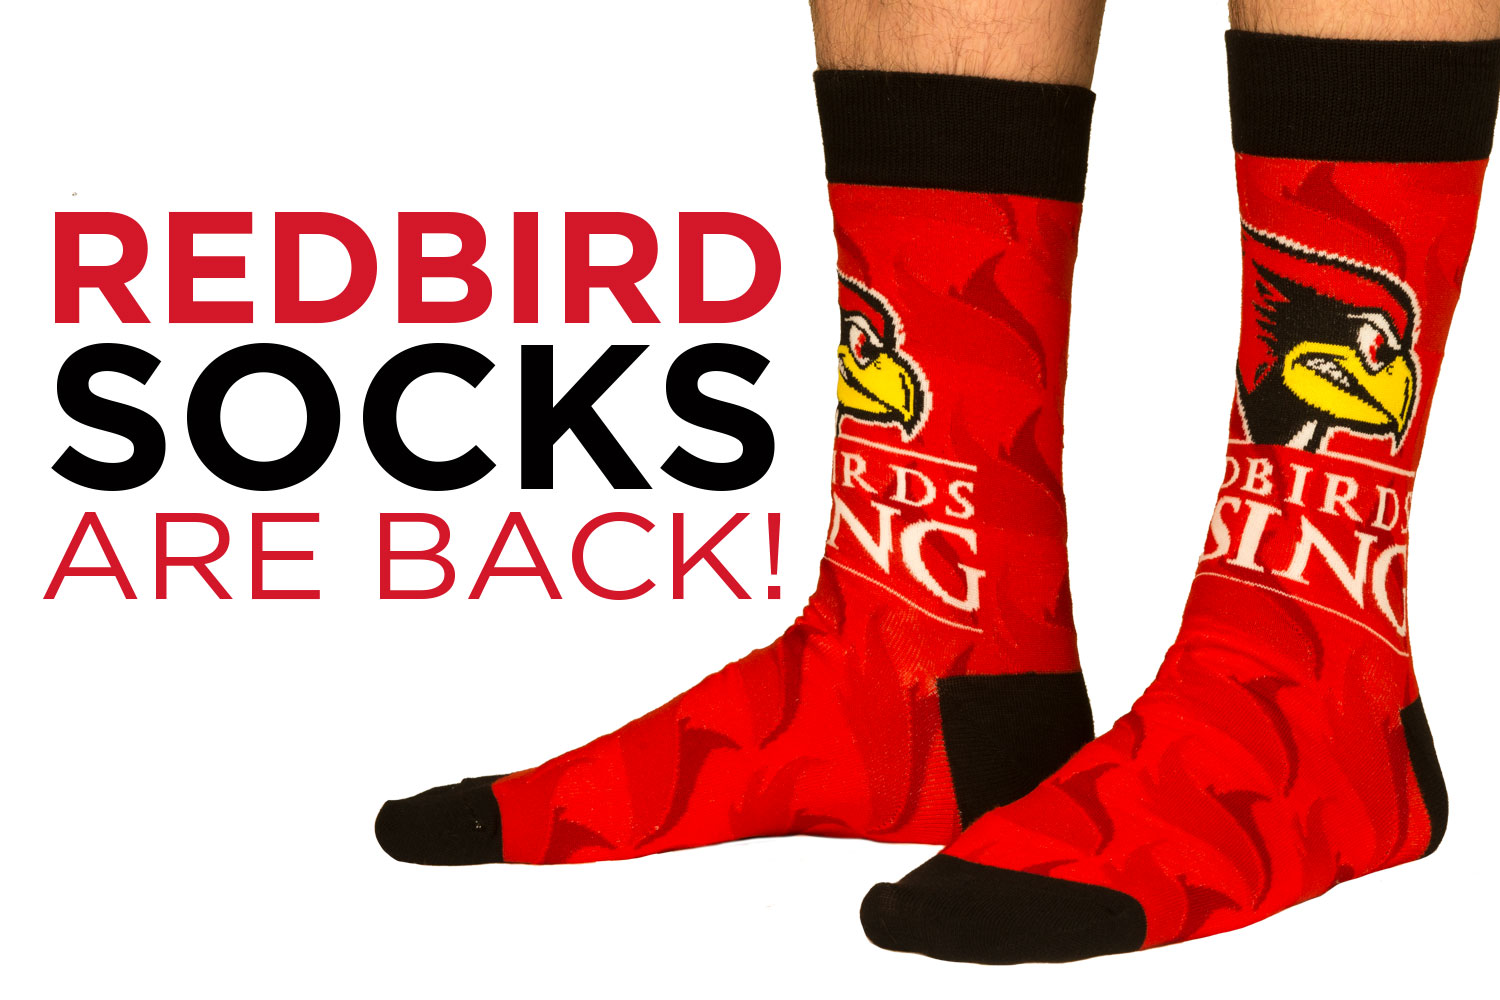 Rock your 2018 Redbird socks - News - Illinois State